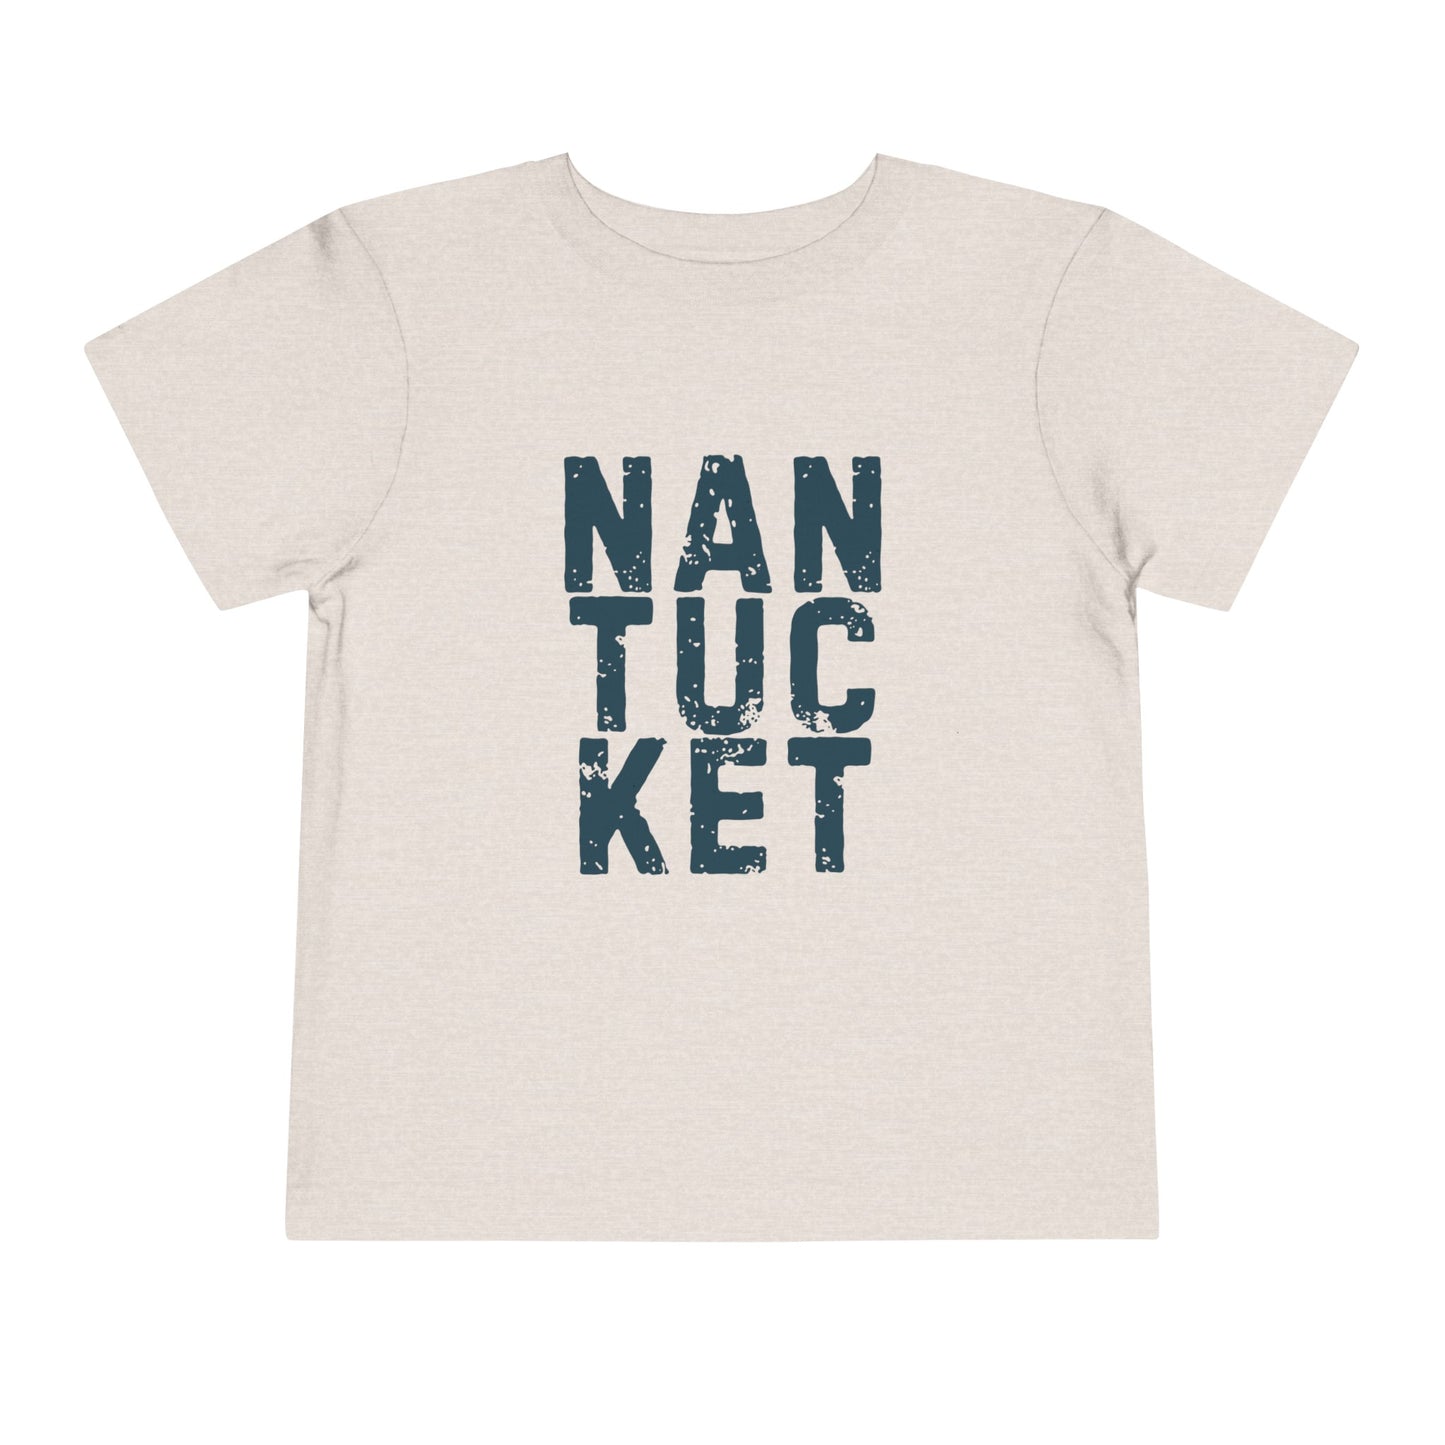 Nantucket Toddler Heather Tee - Soft Airlume Cotton, Comfortable & Stylish